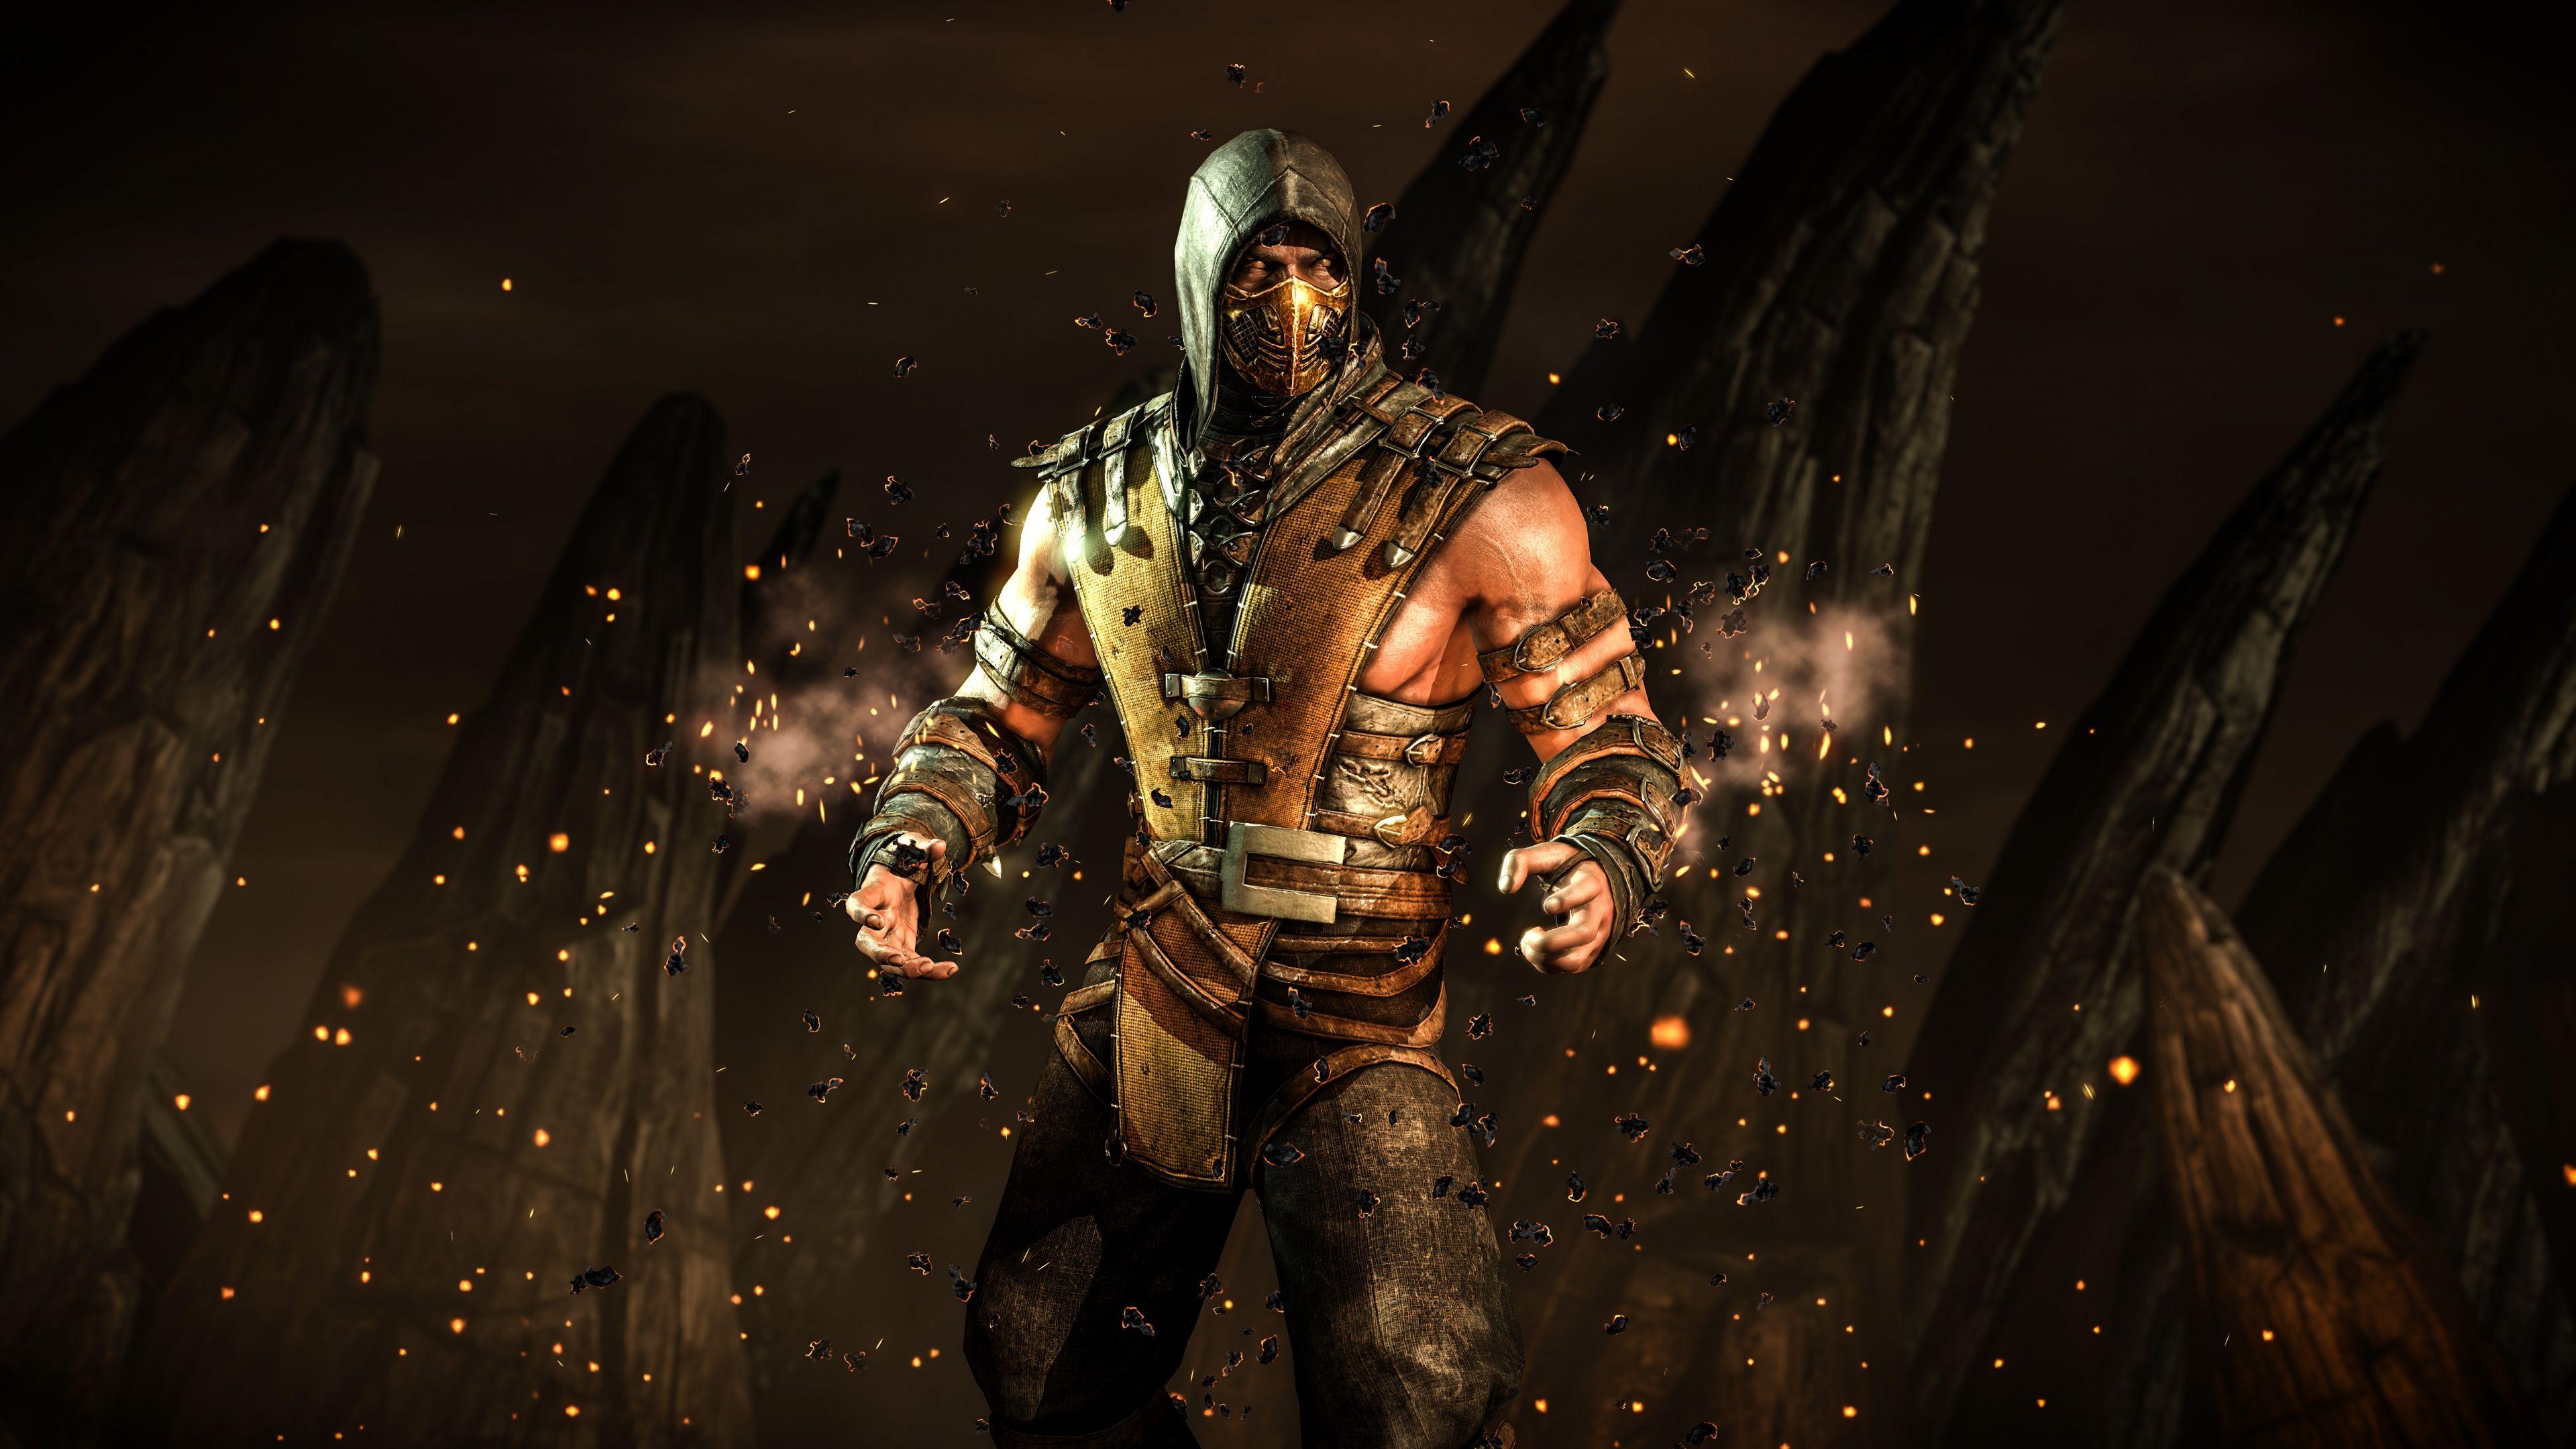 Mortal Kombat X Scorpion Hellfire Wallpaper in jpg format for free